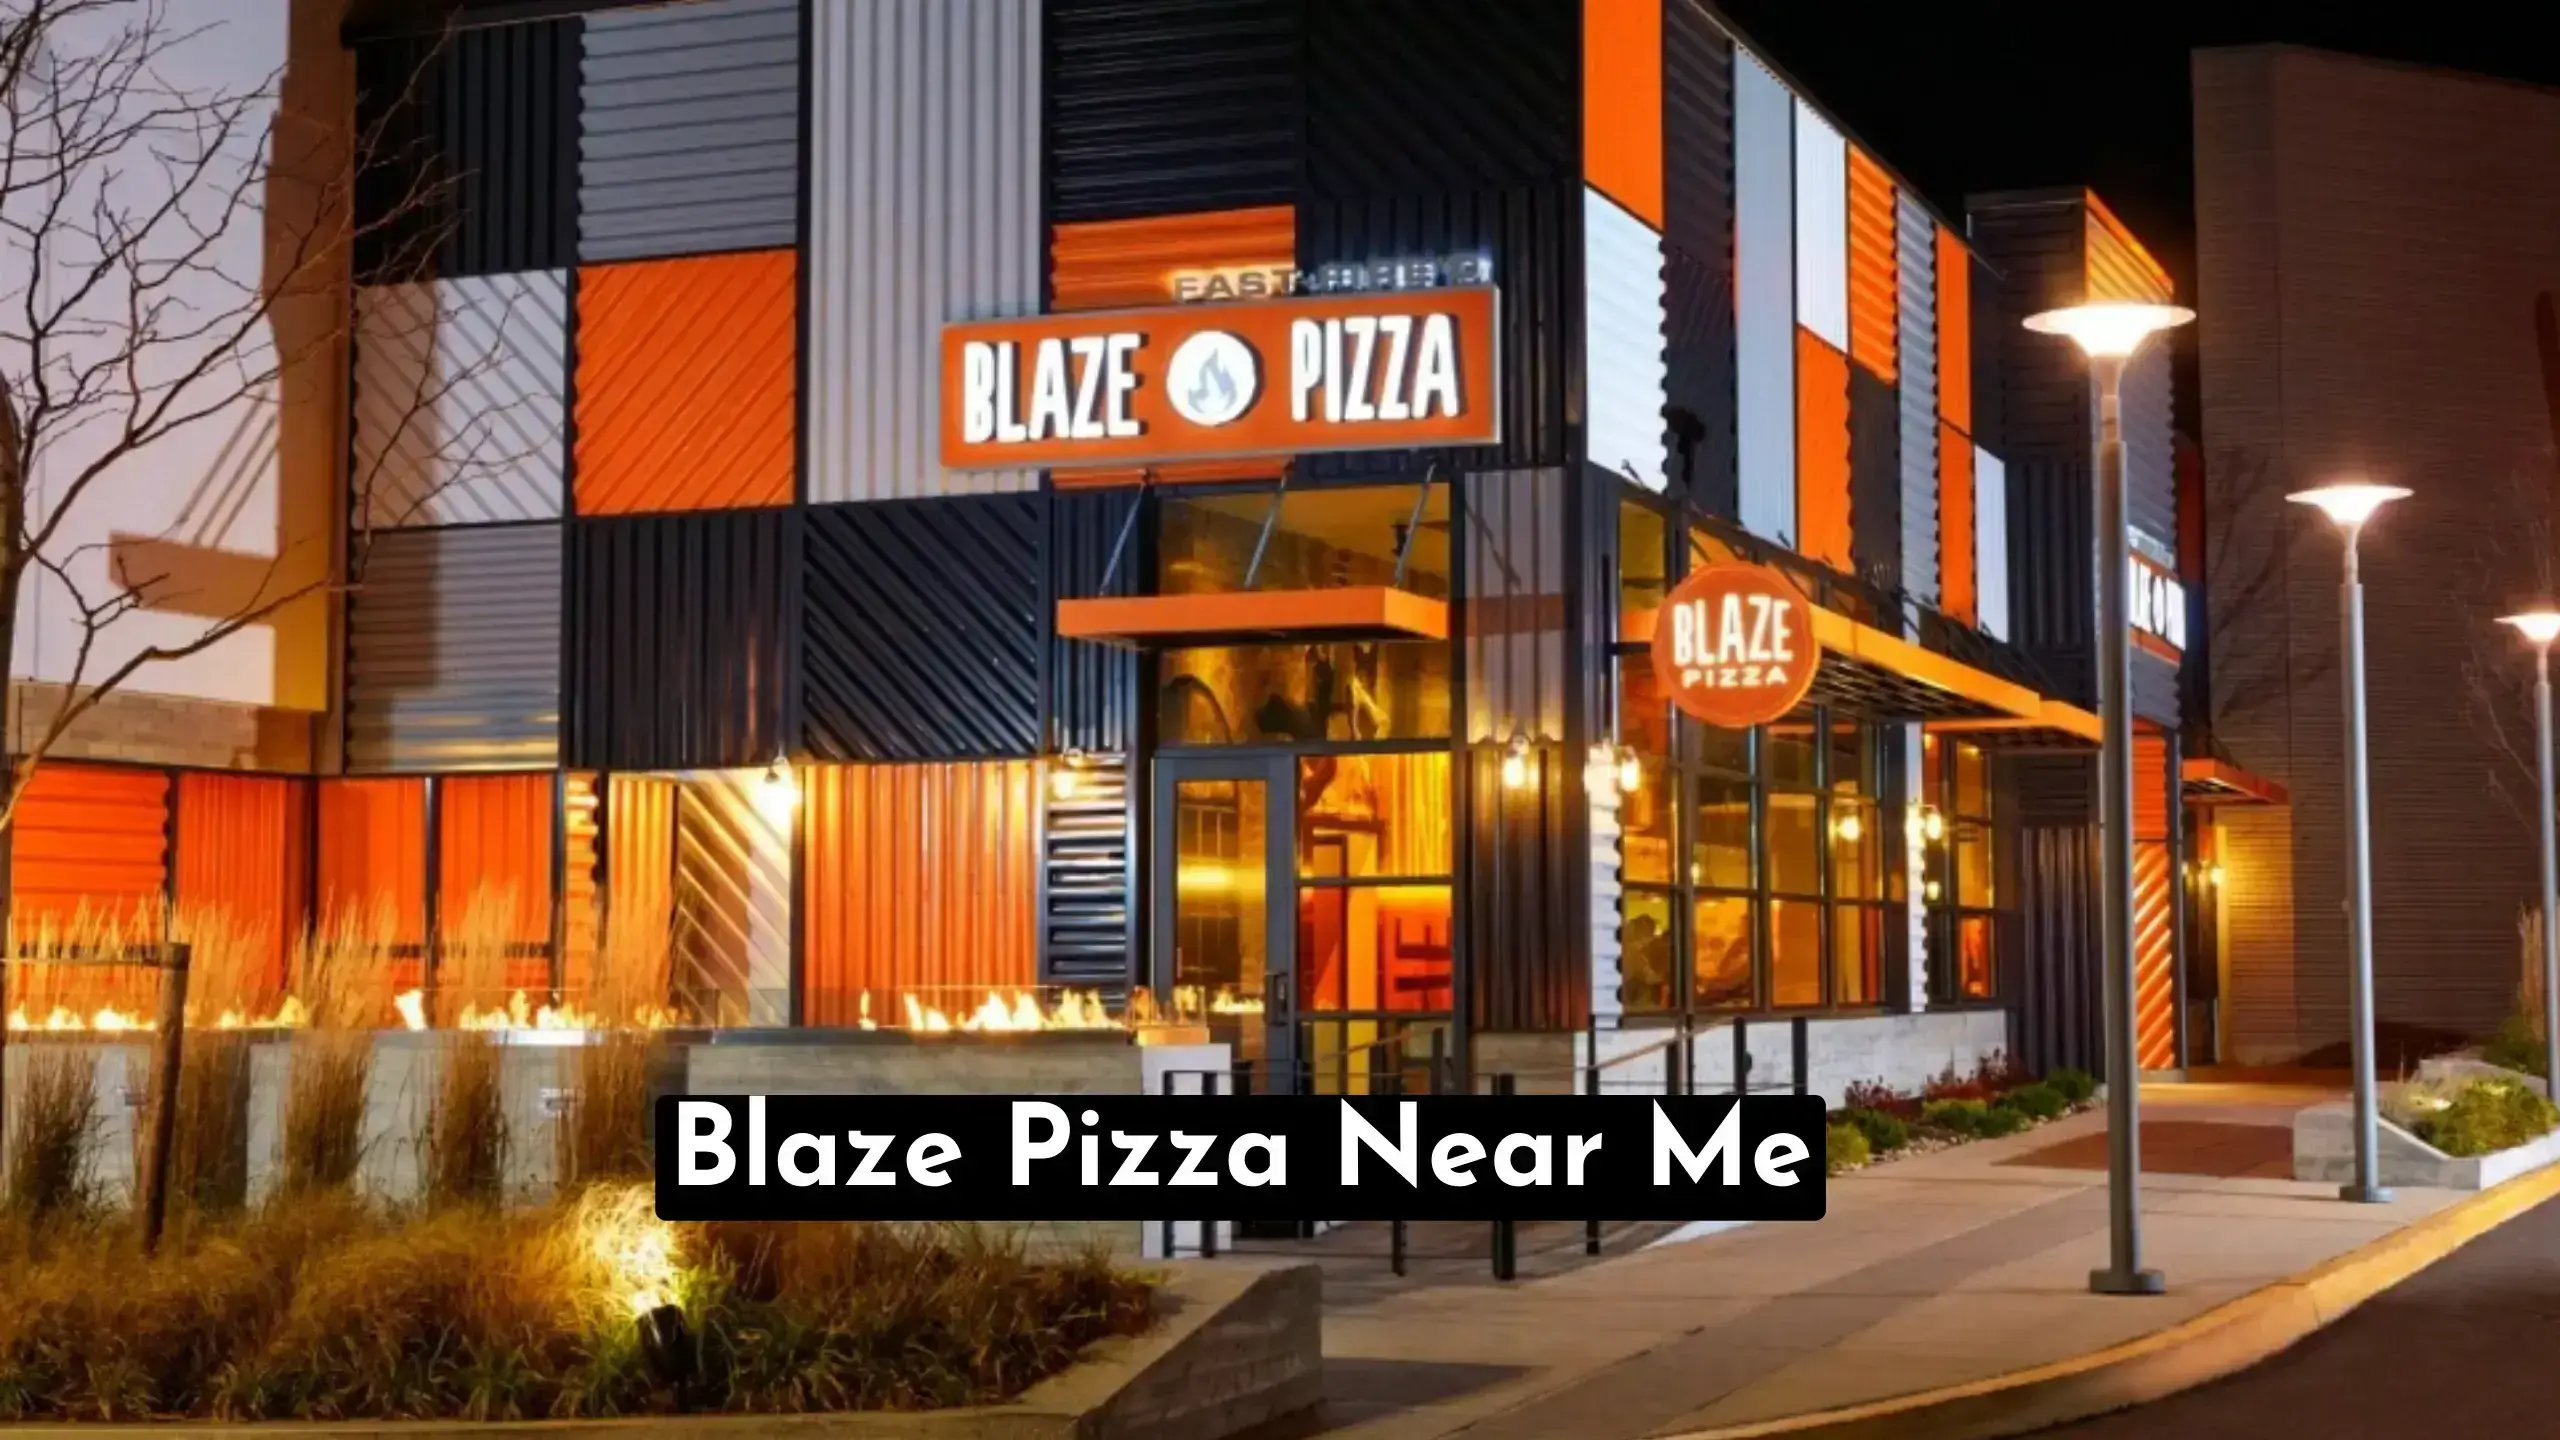 Blaze Pizza Near Me: Find Your Customized Pizza